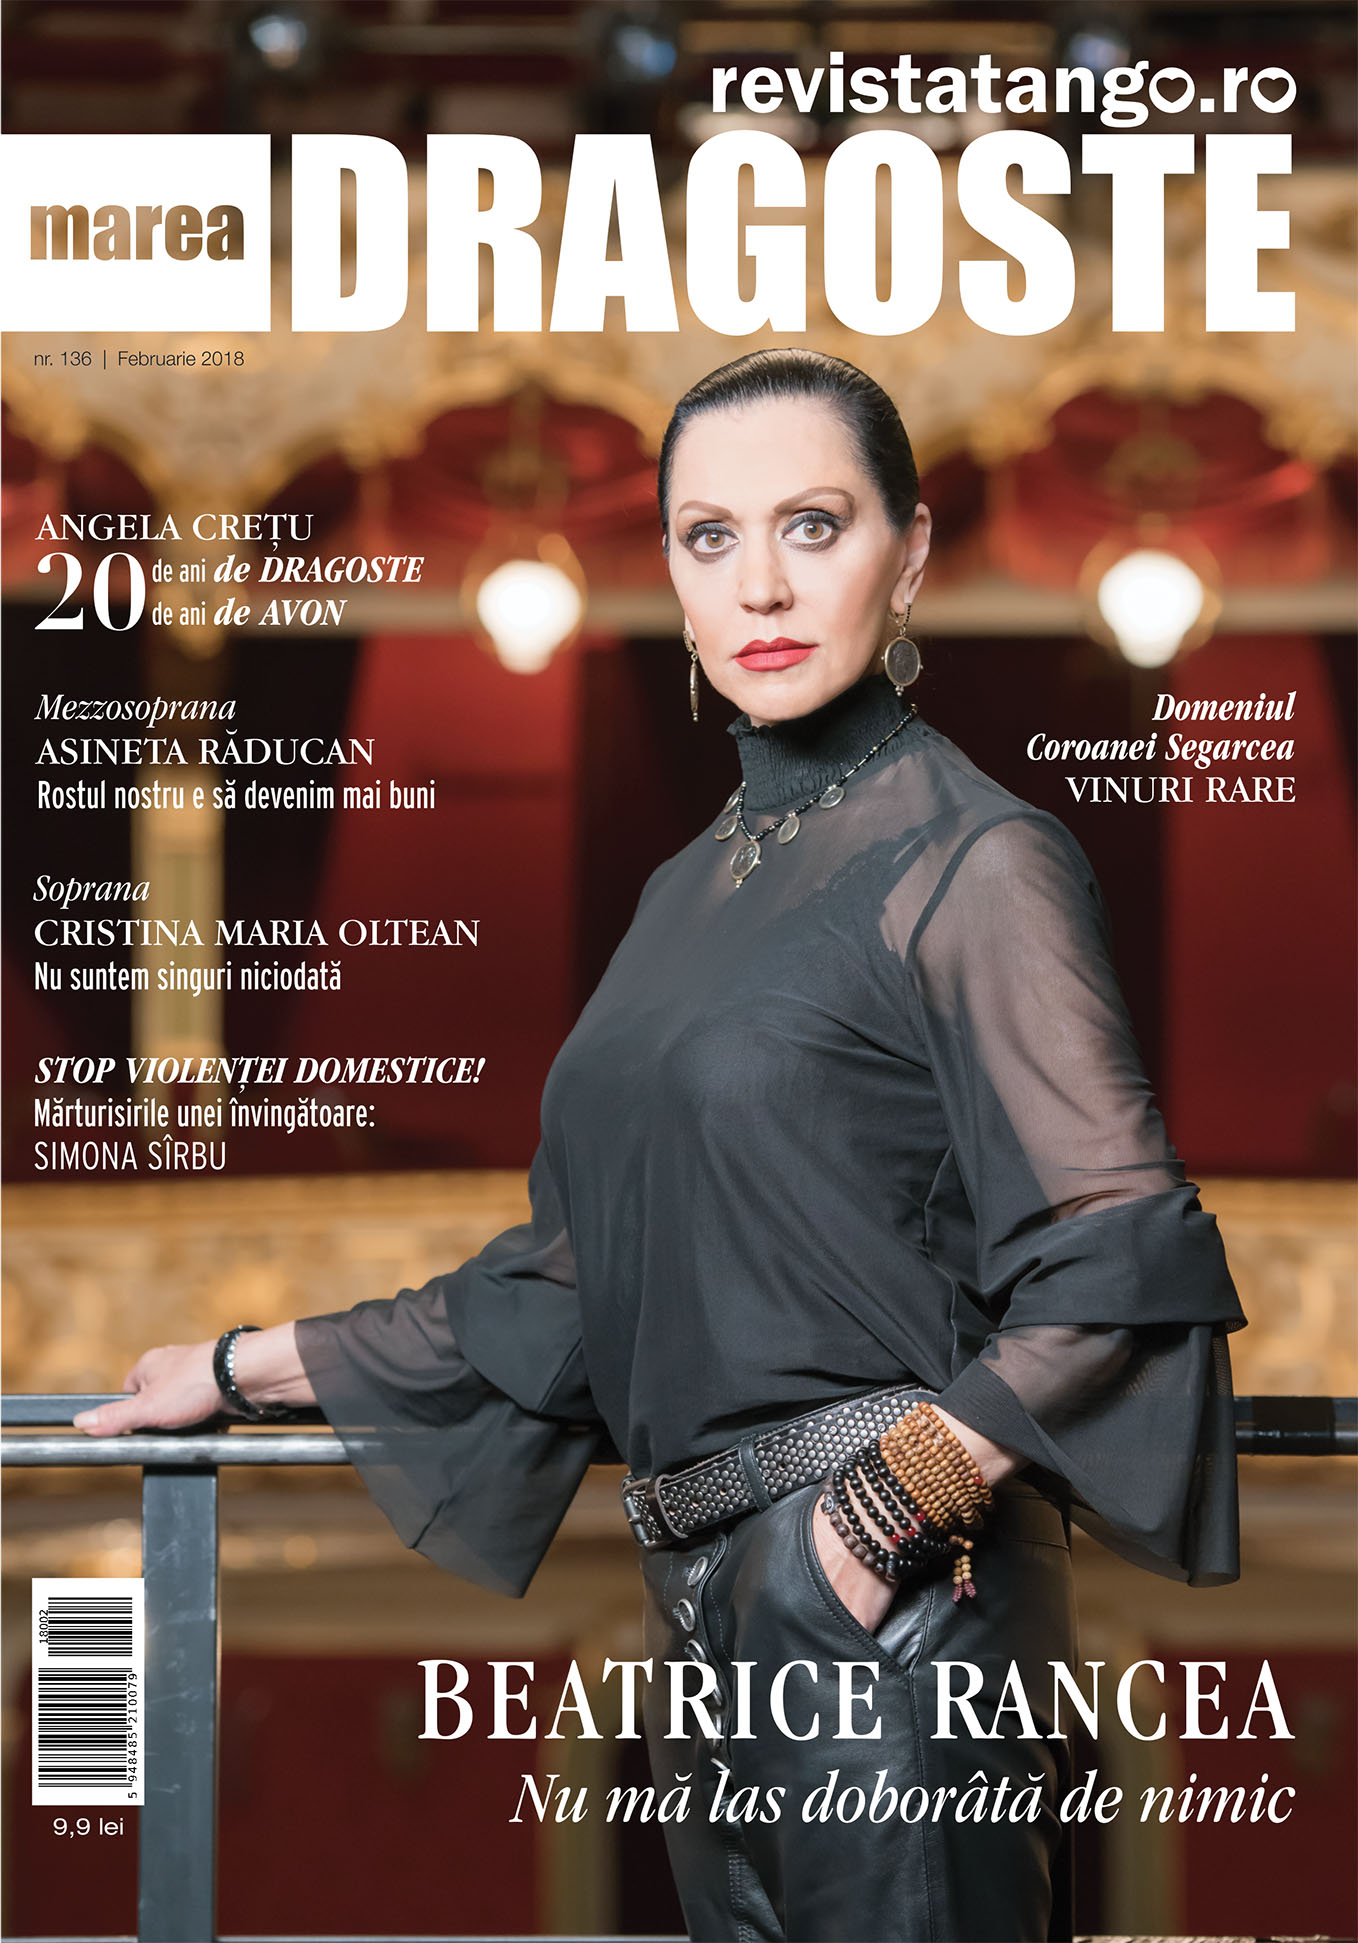 Beatrice Rancea pe coperta Marea Dragoste-revistatango.ro, nr. 136, februarie 2018